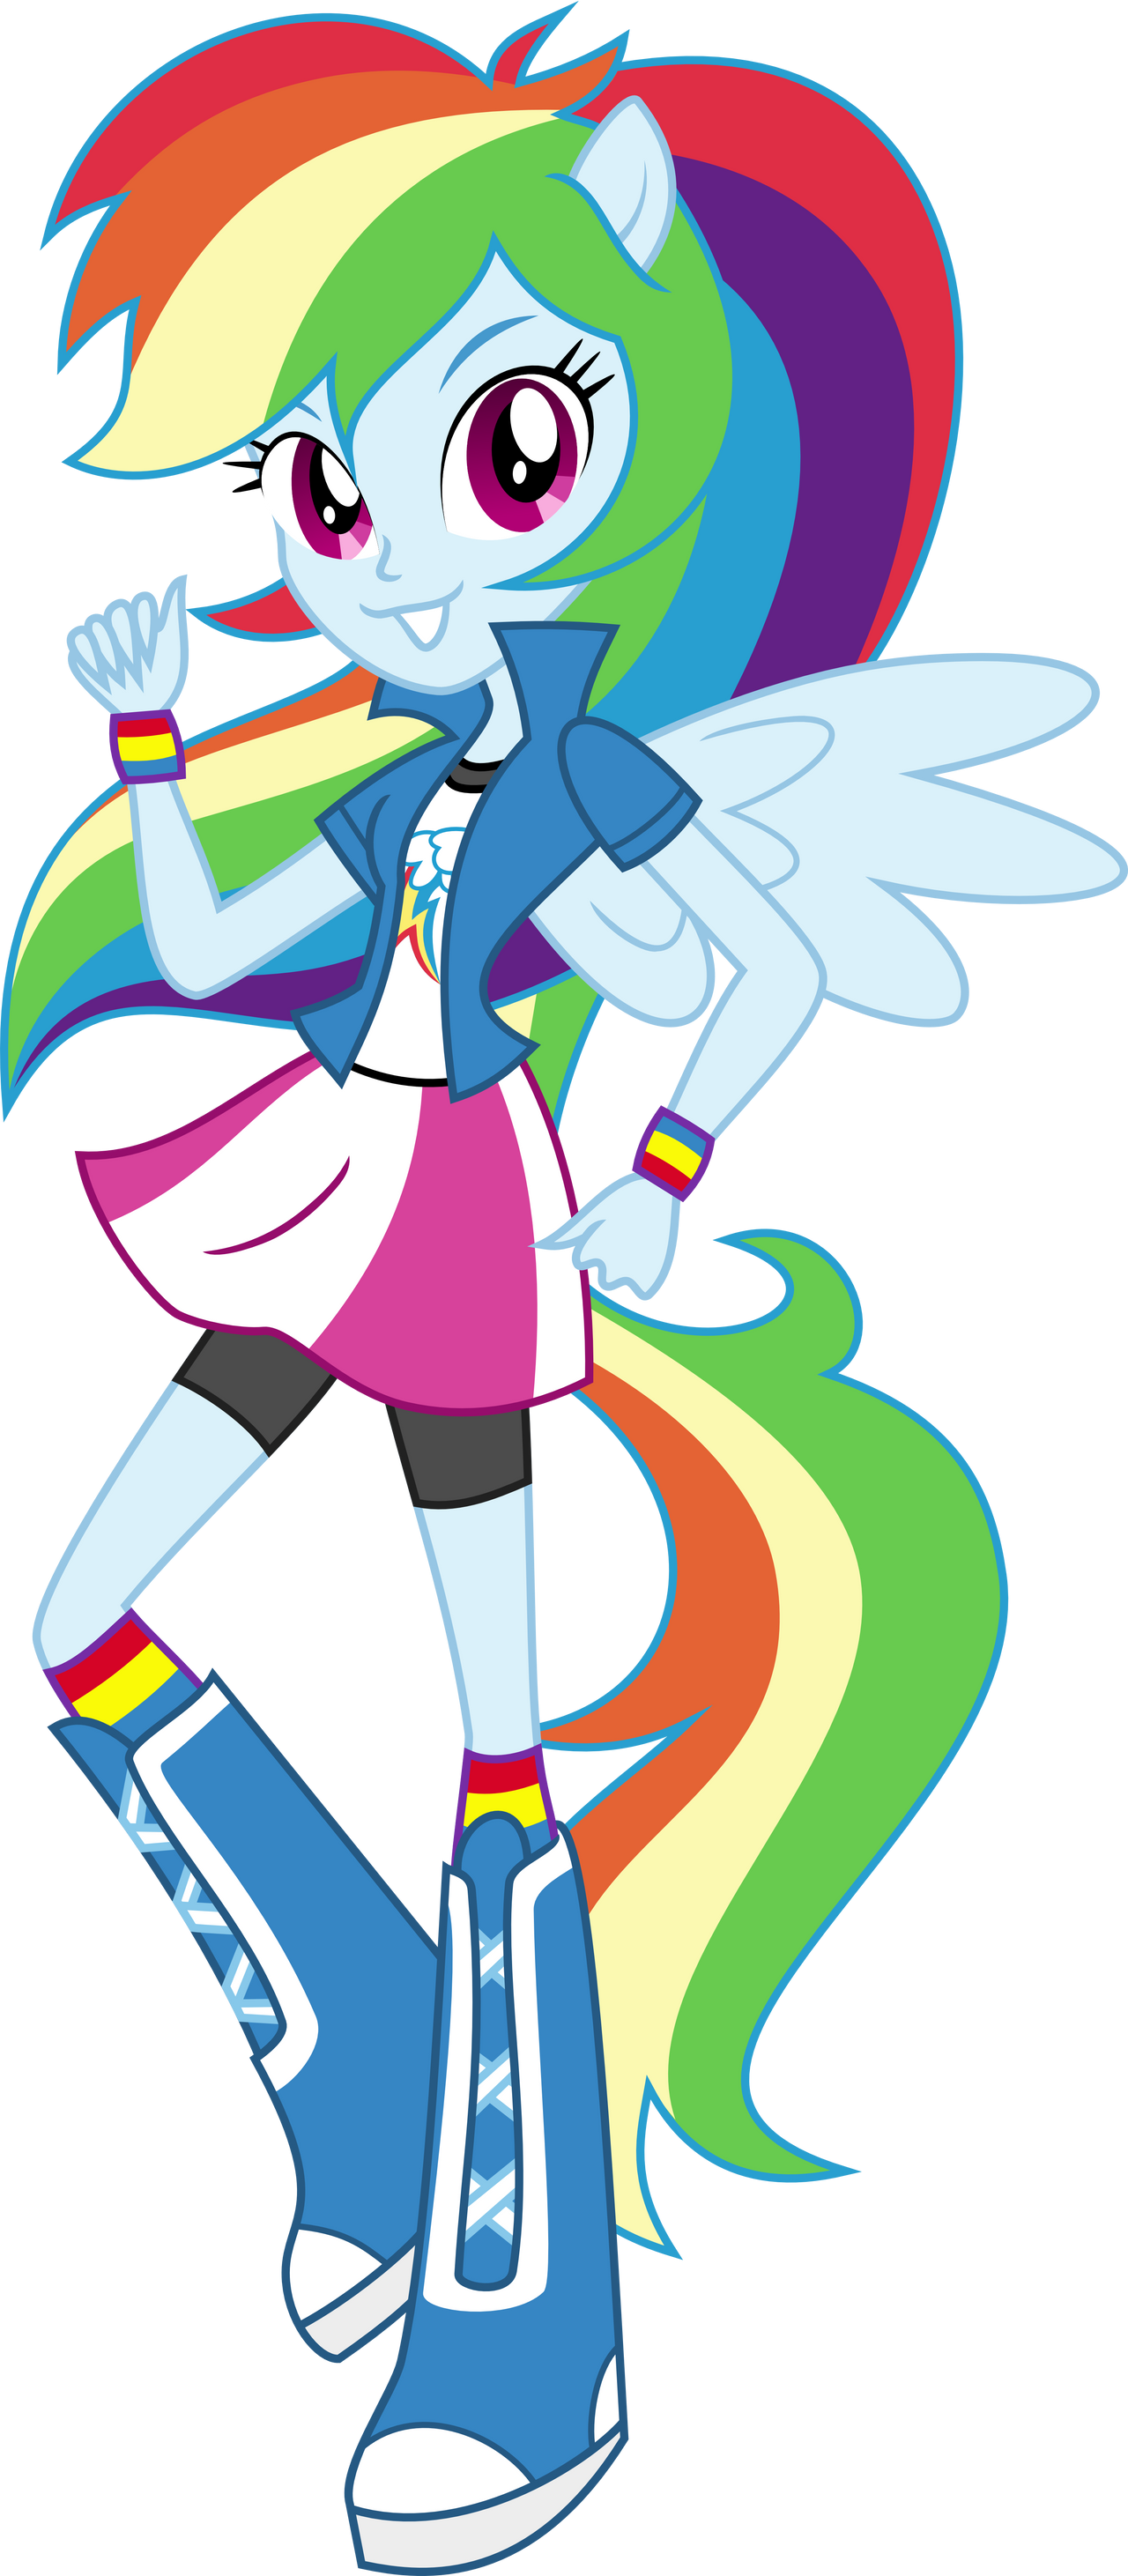 Equestria Girls: Rainbow Dash by TheShadowStone on DeviantArt